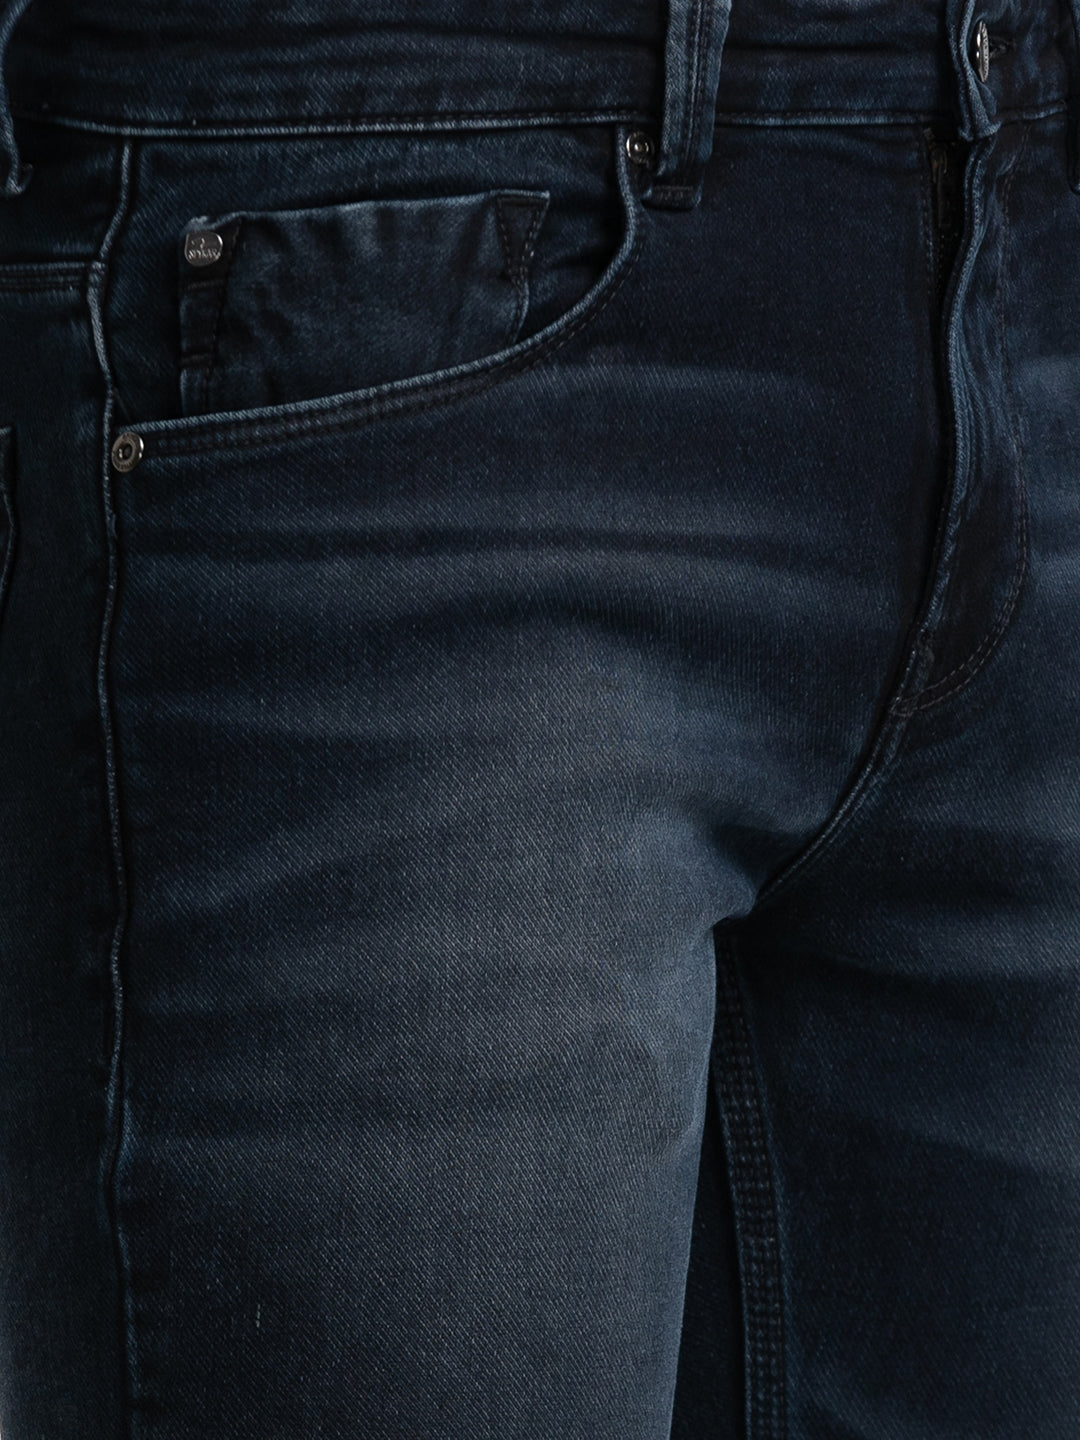 Spykar Black Indigo Cotton Slim Fit Narrow Length Jeans For Men (Skinny)